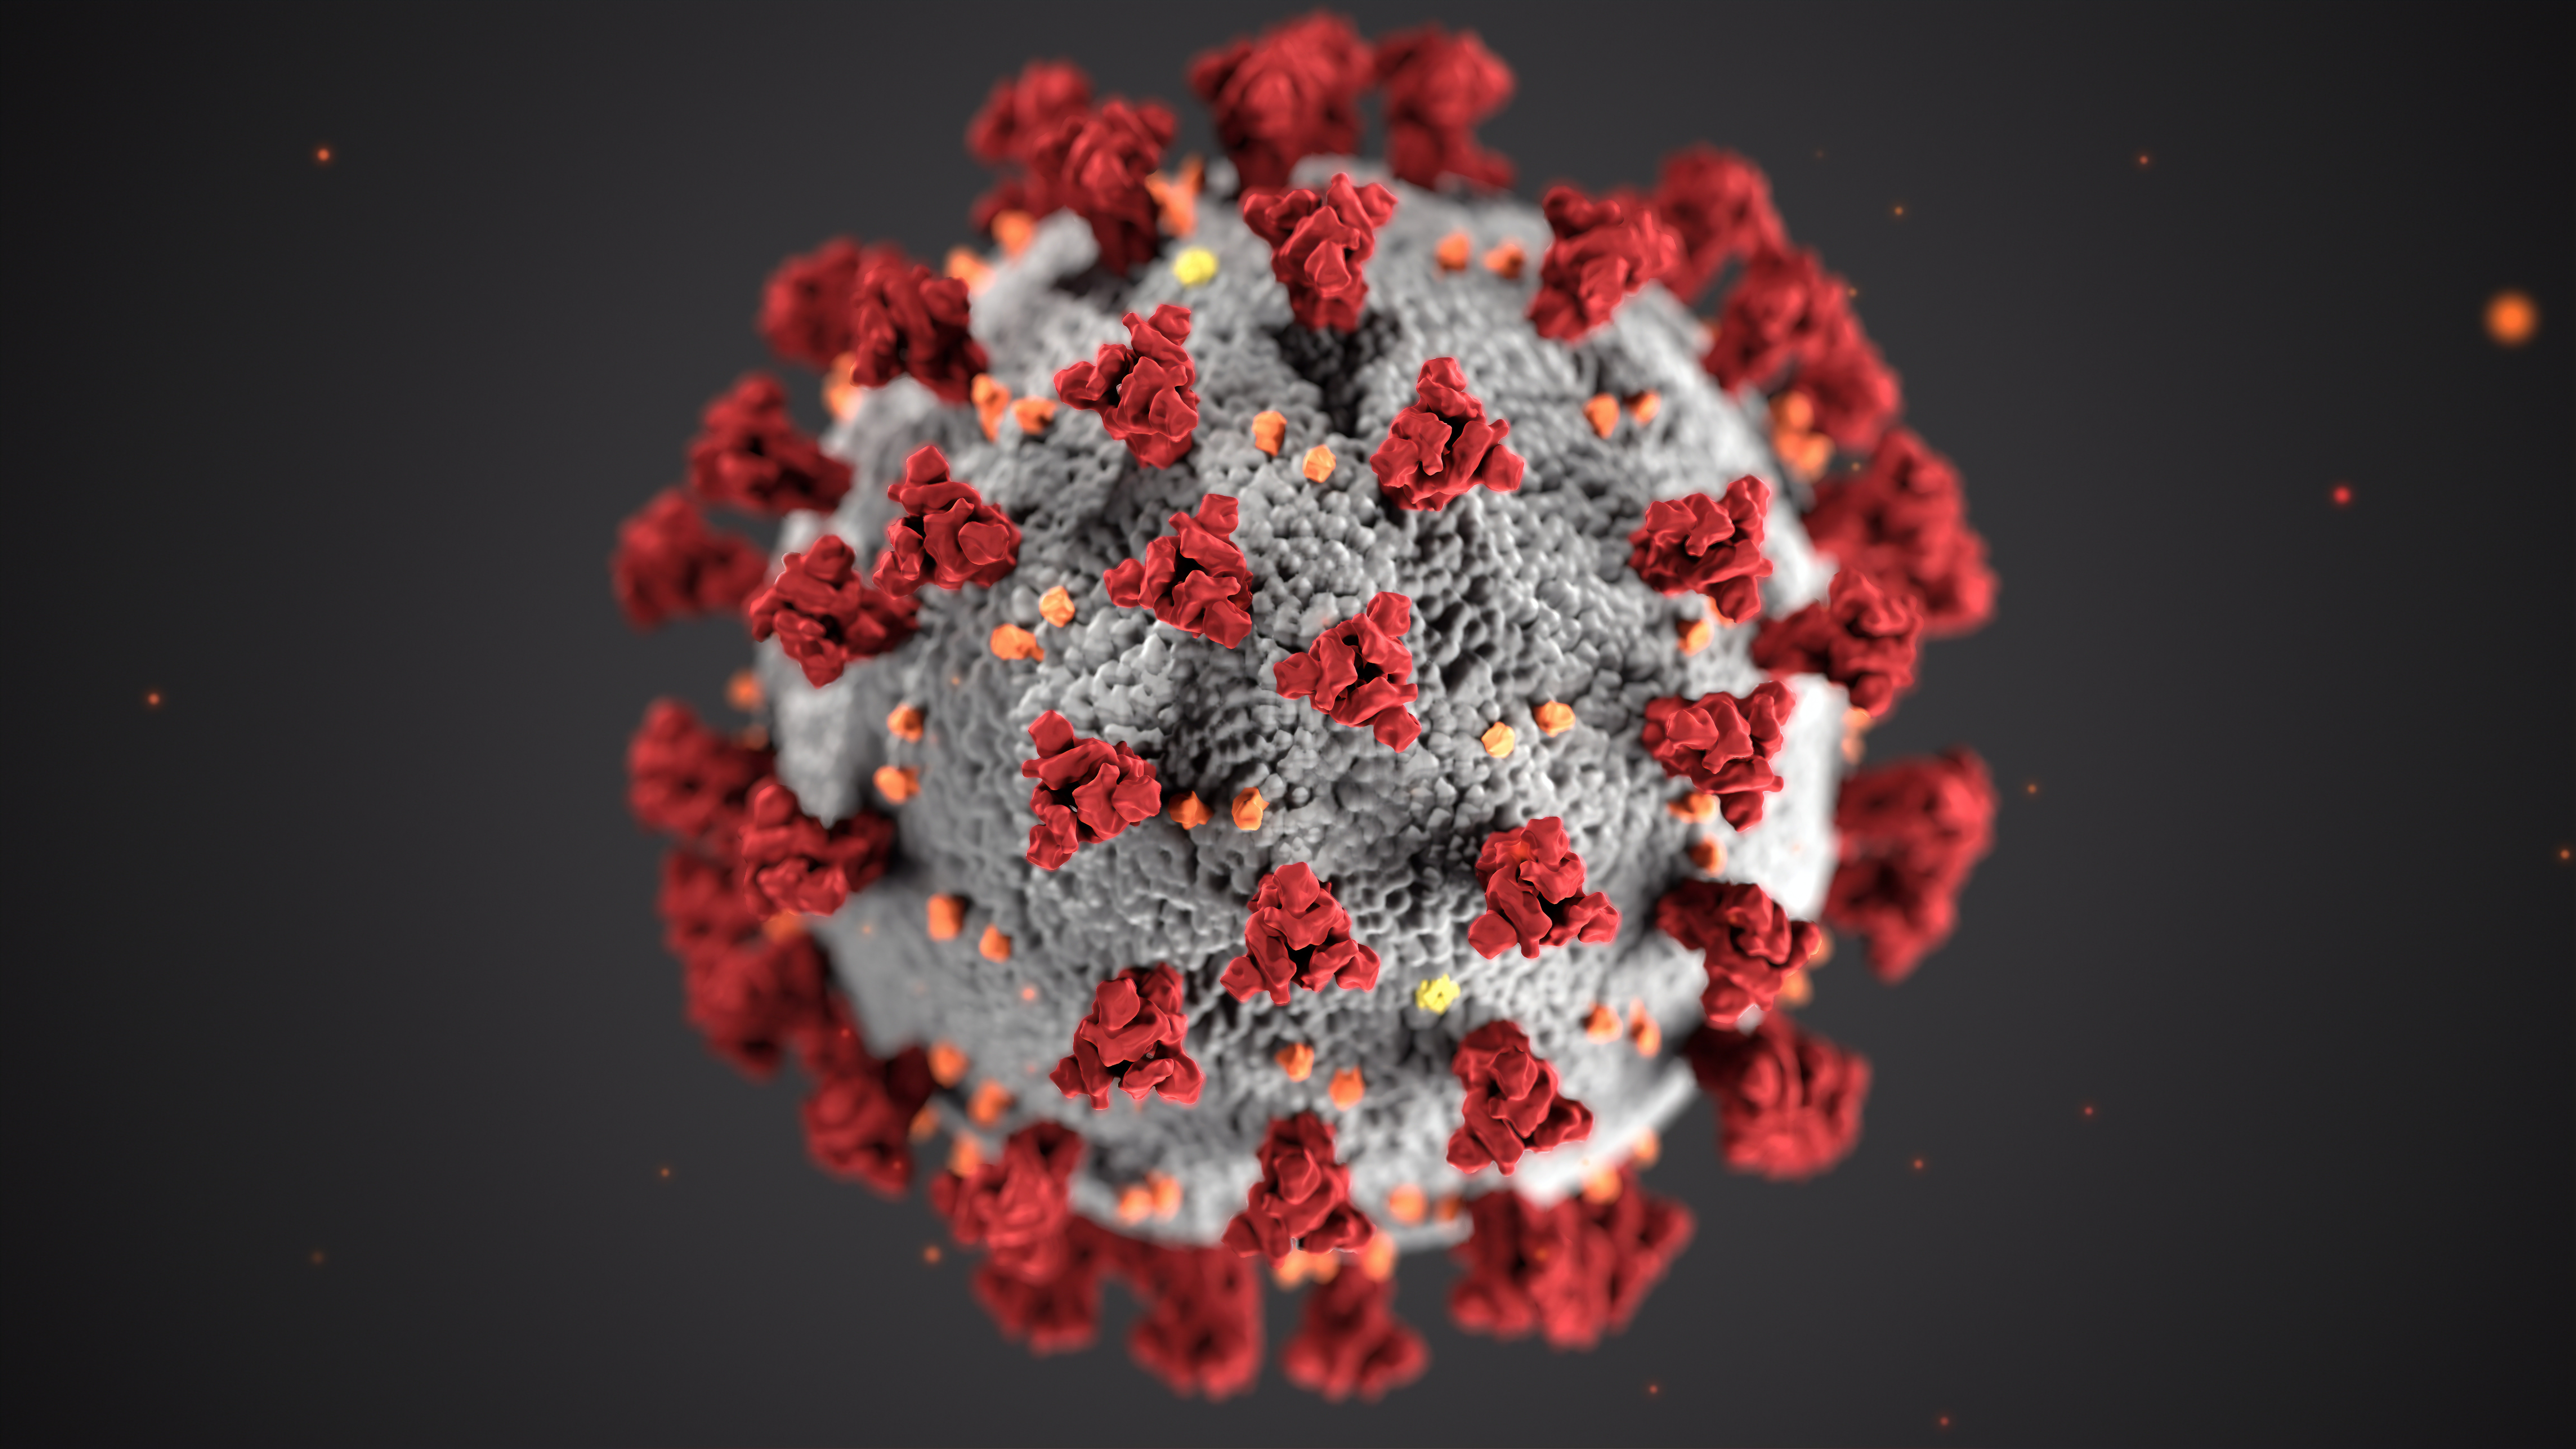 Coronavirus i mutagènesi letal: funcionaria?